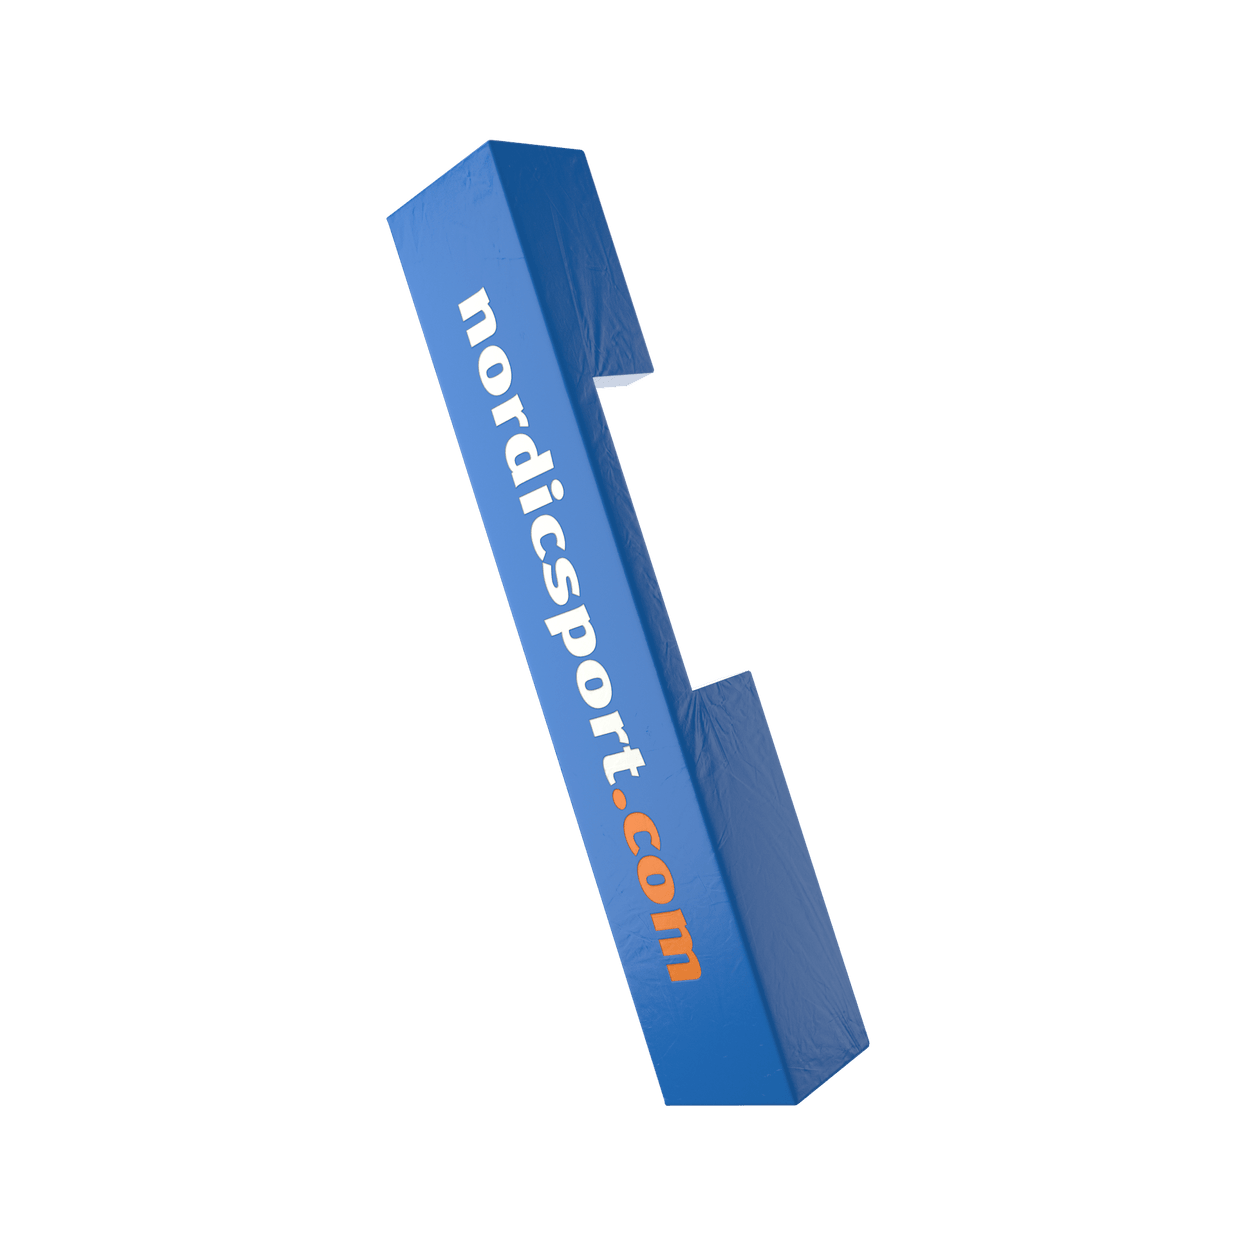 Pole Vault Stand Elite Protection Pad - Nordic Sport Australia Pty Ltd